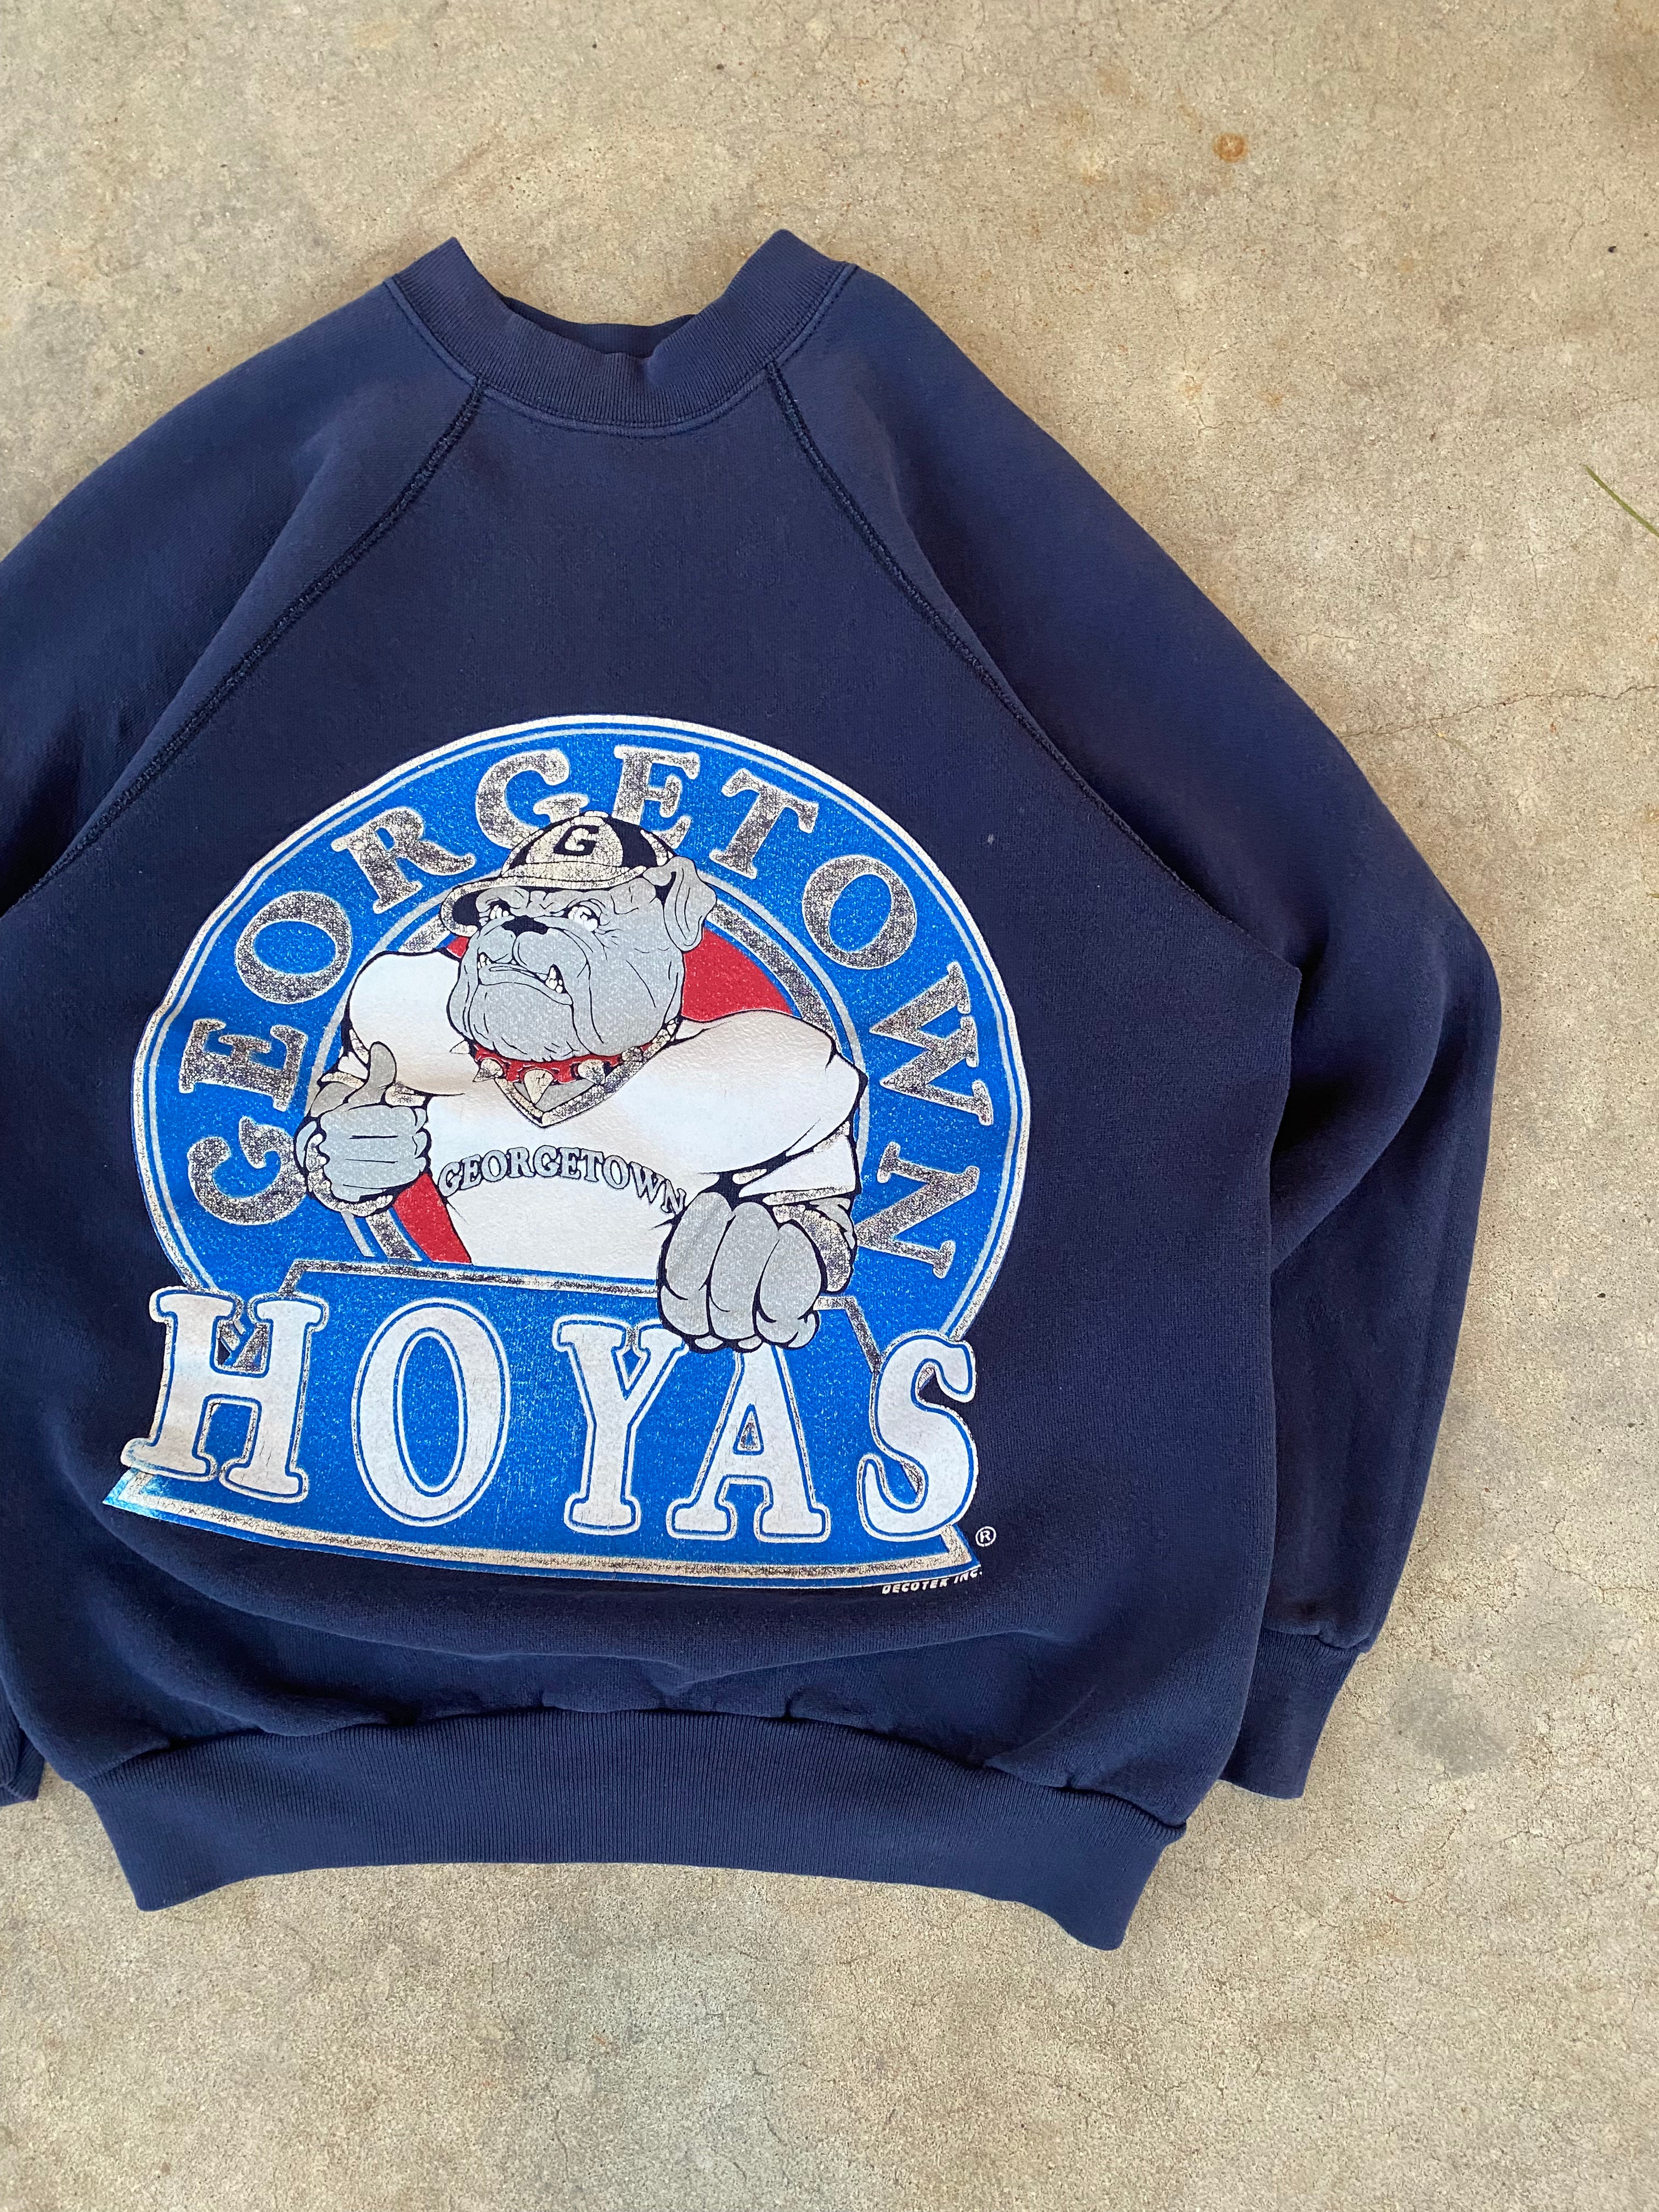 1980s Georgetown Hoyas Faded Crewneck (M)